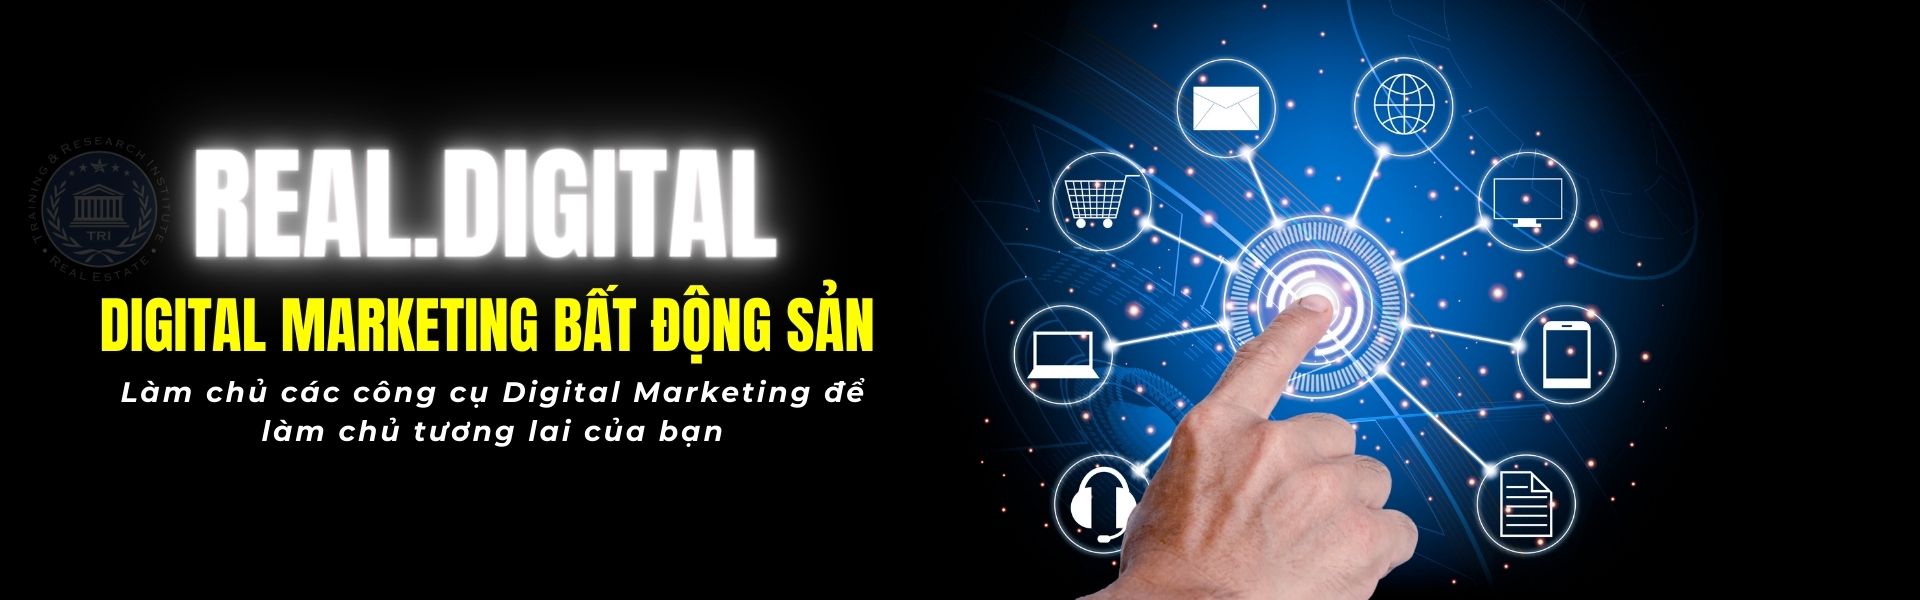 Digital Marketing Bat Dong San Real.Digital